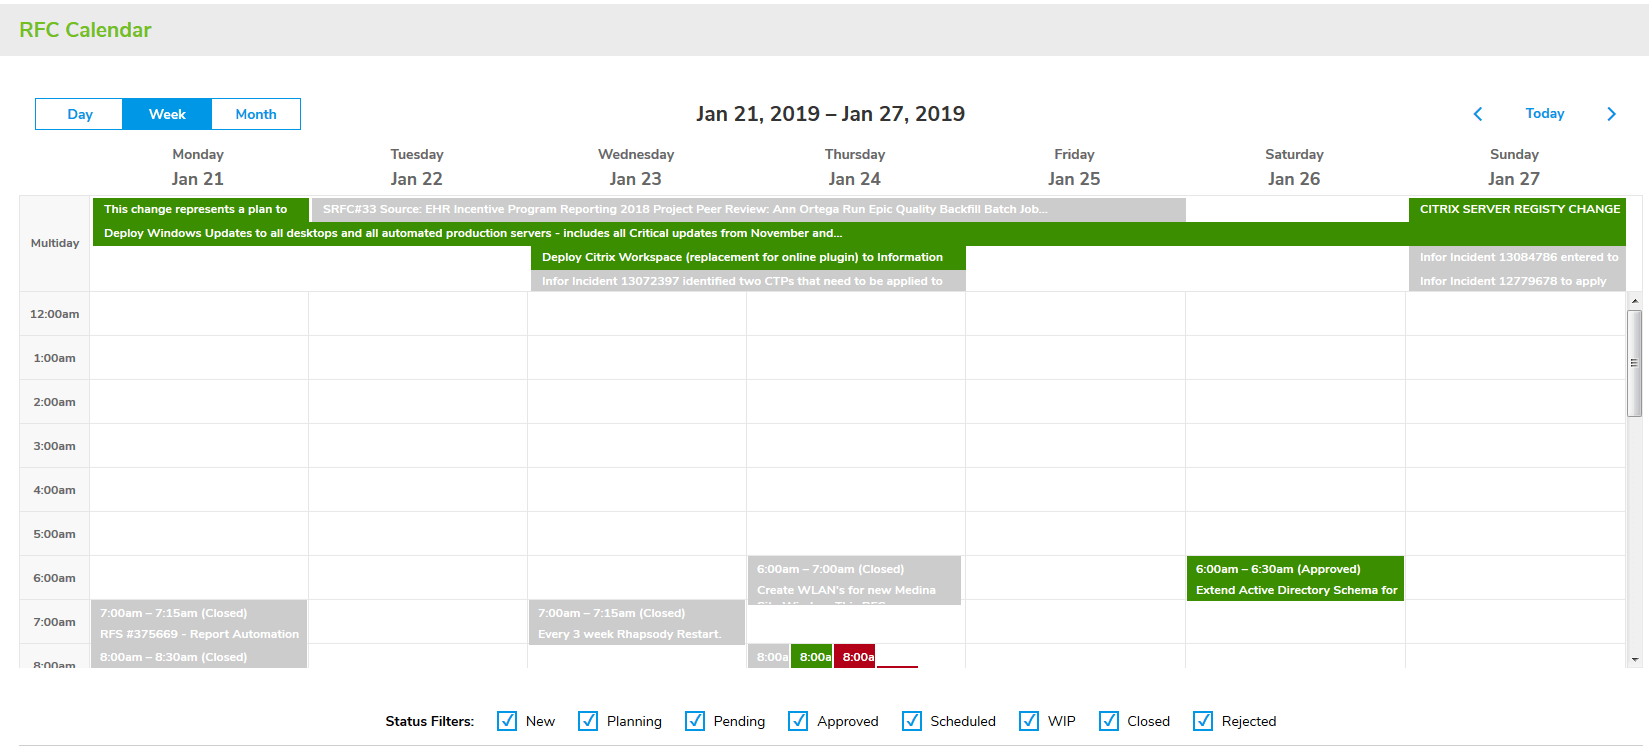 Change Management RFC Calendar Weekly View